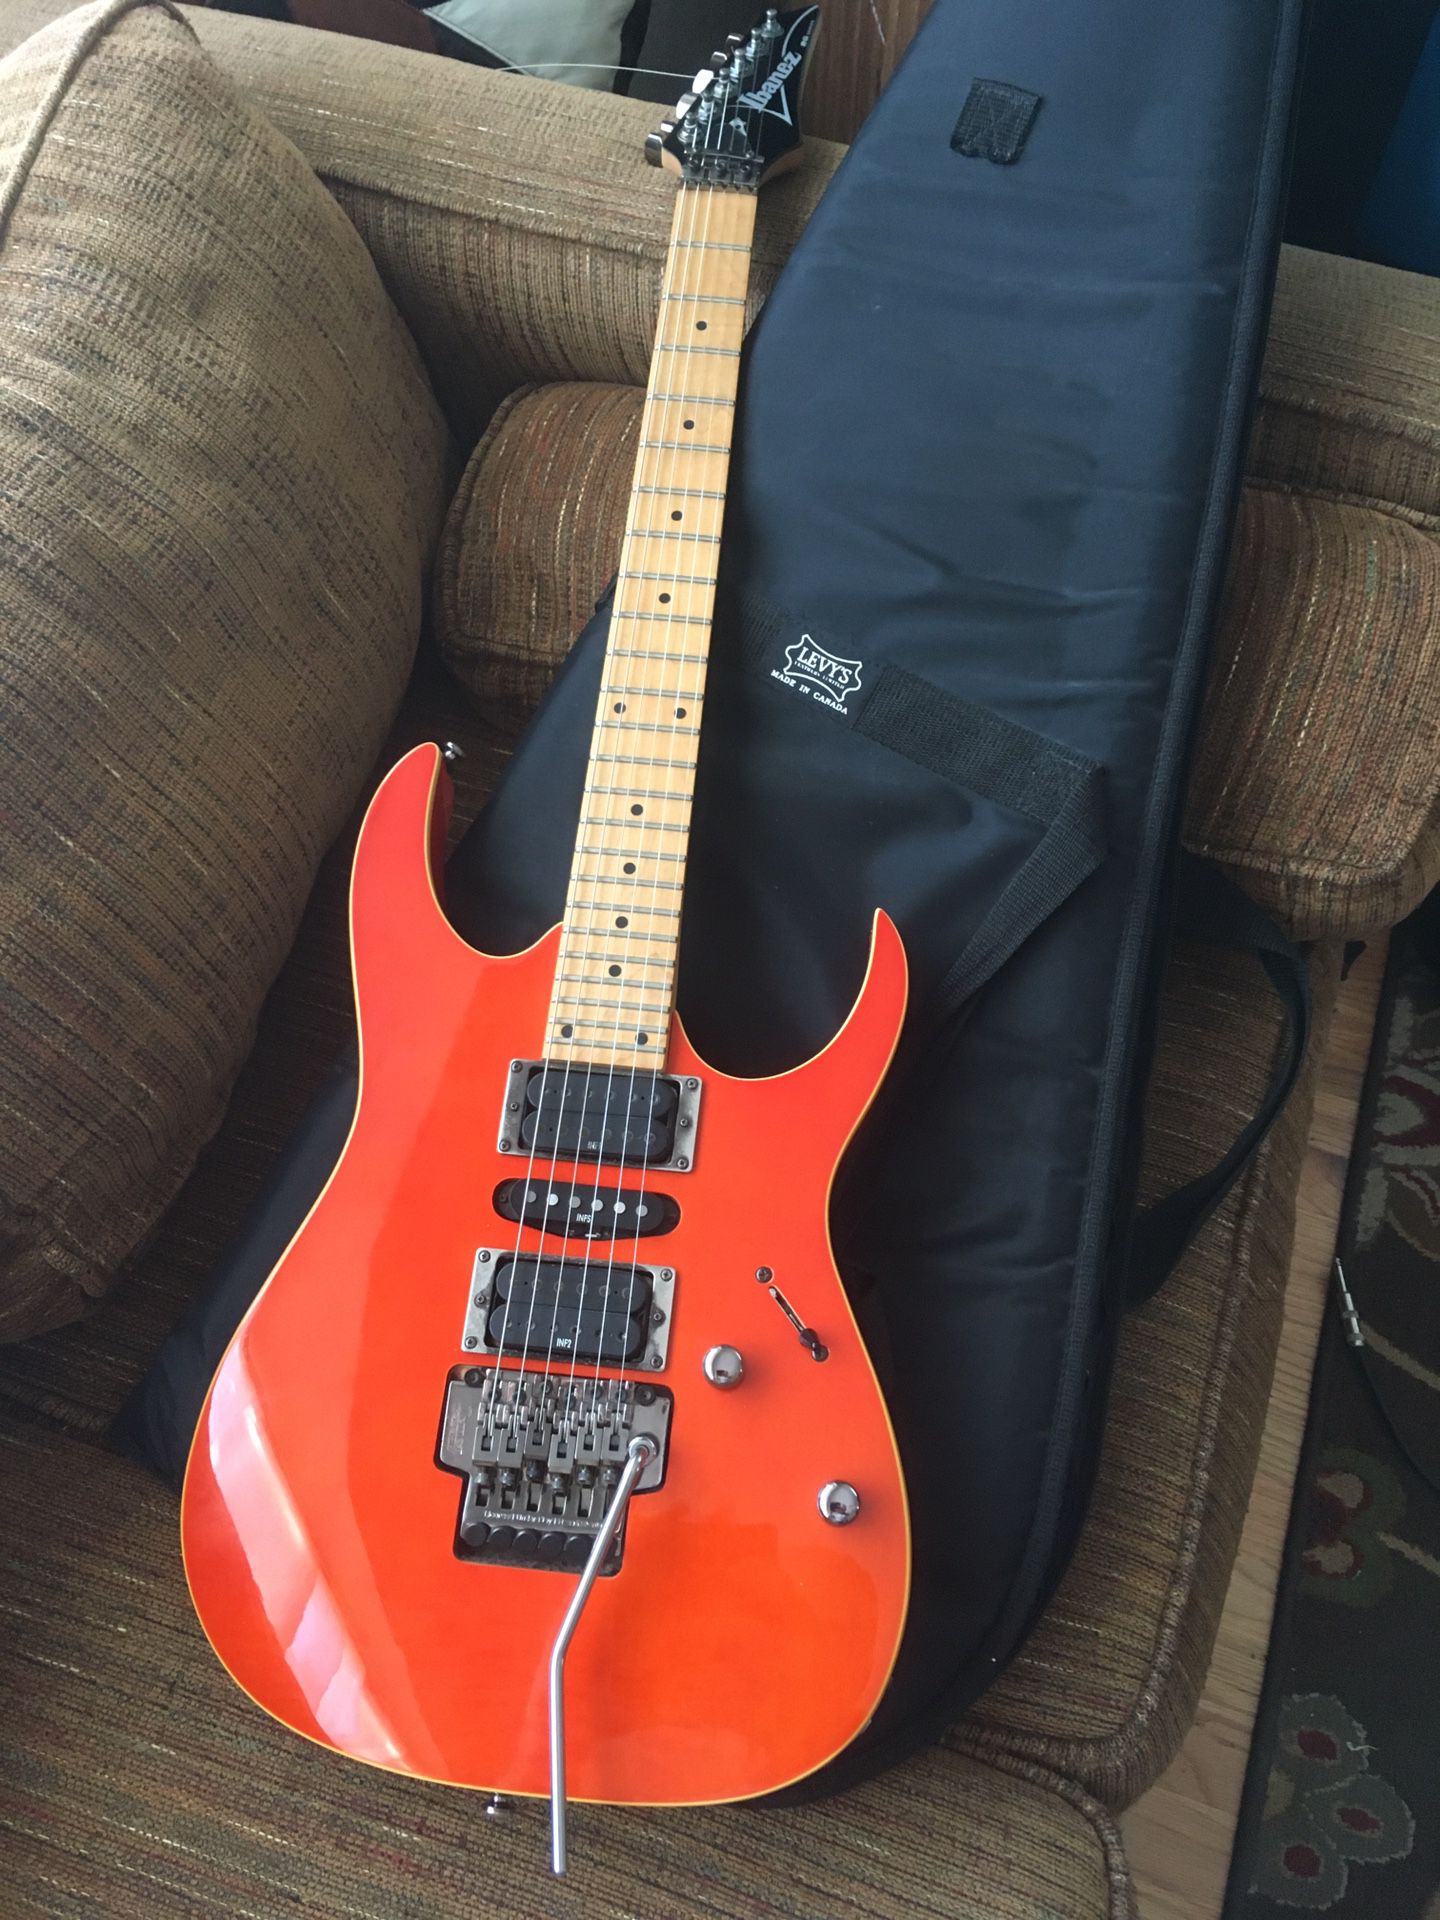 Ibanez RG470 orange guitar/amp/pedal